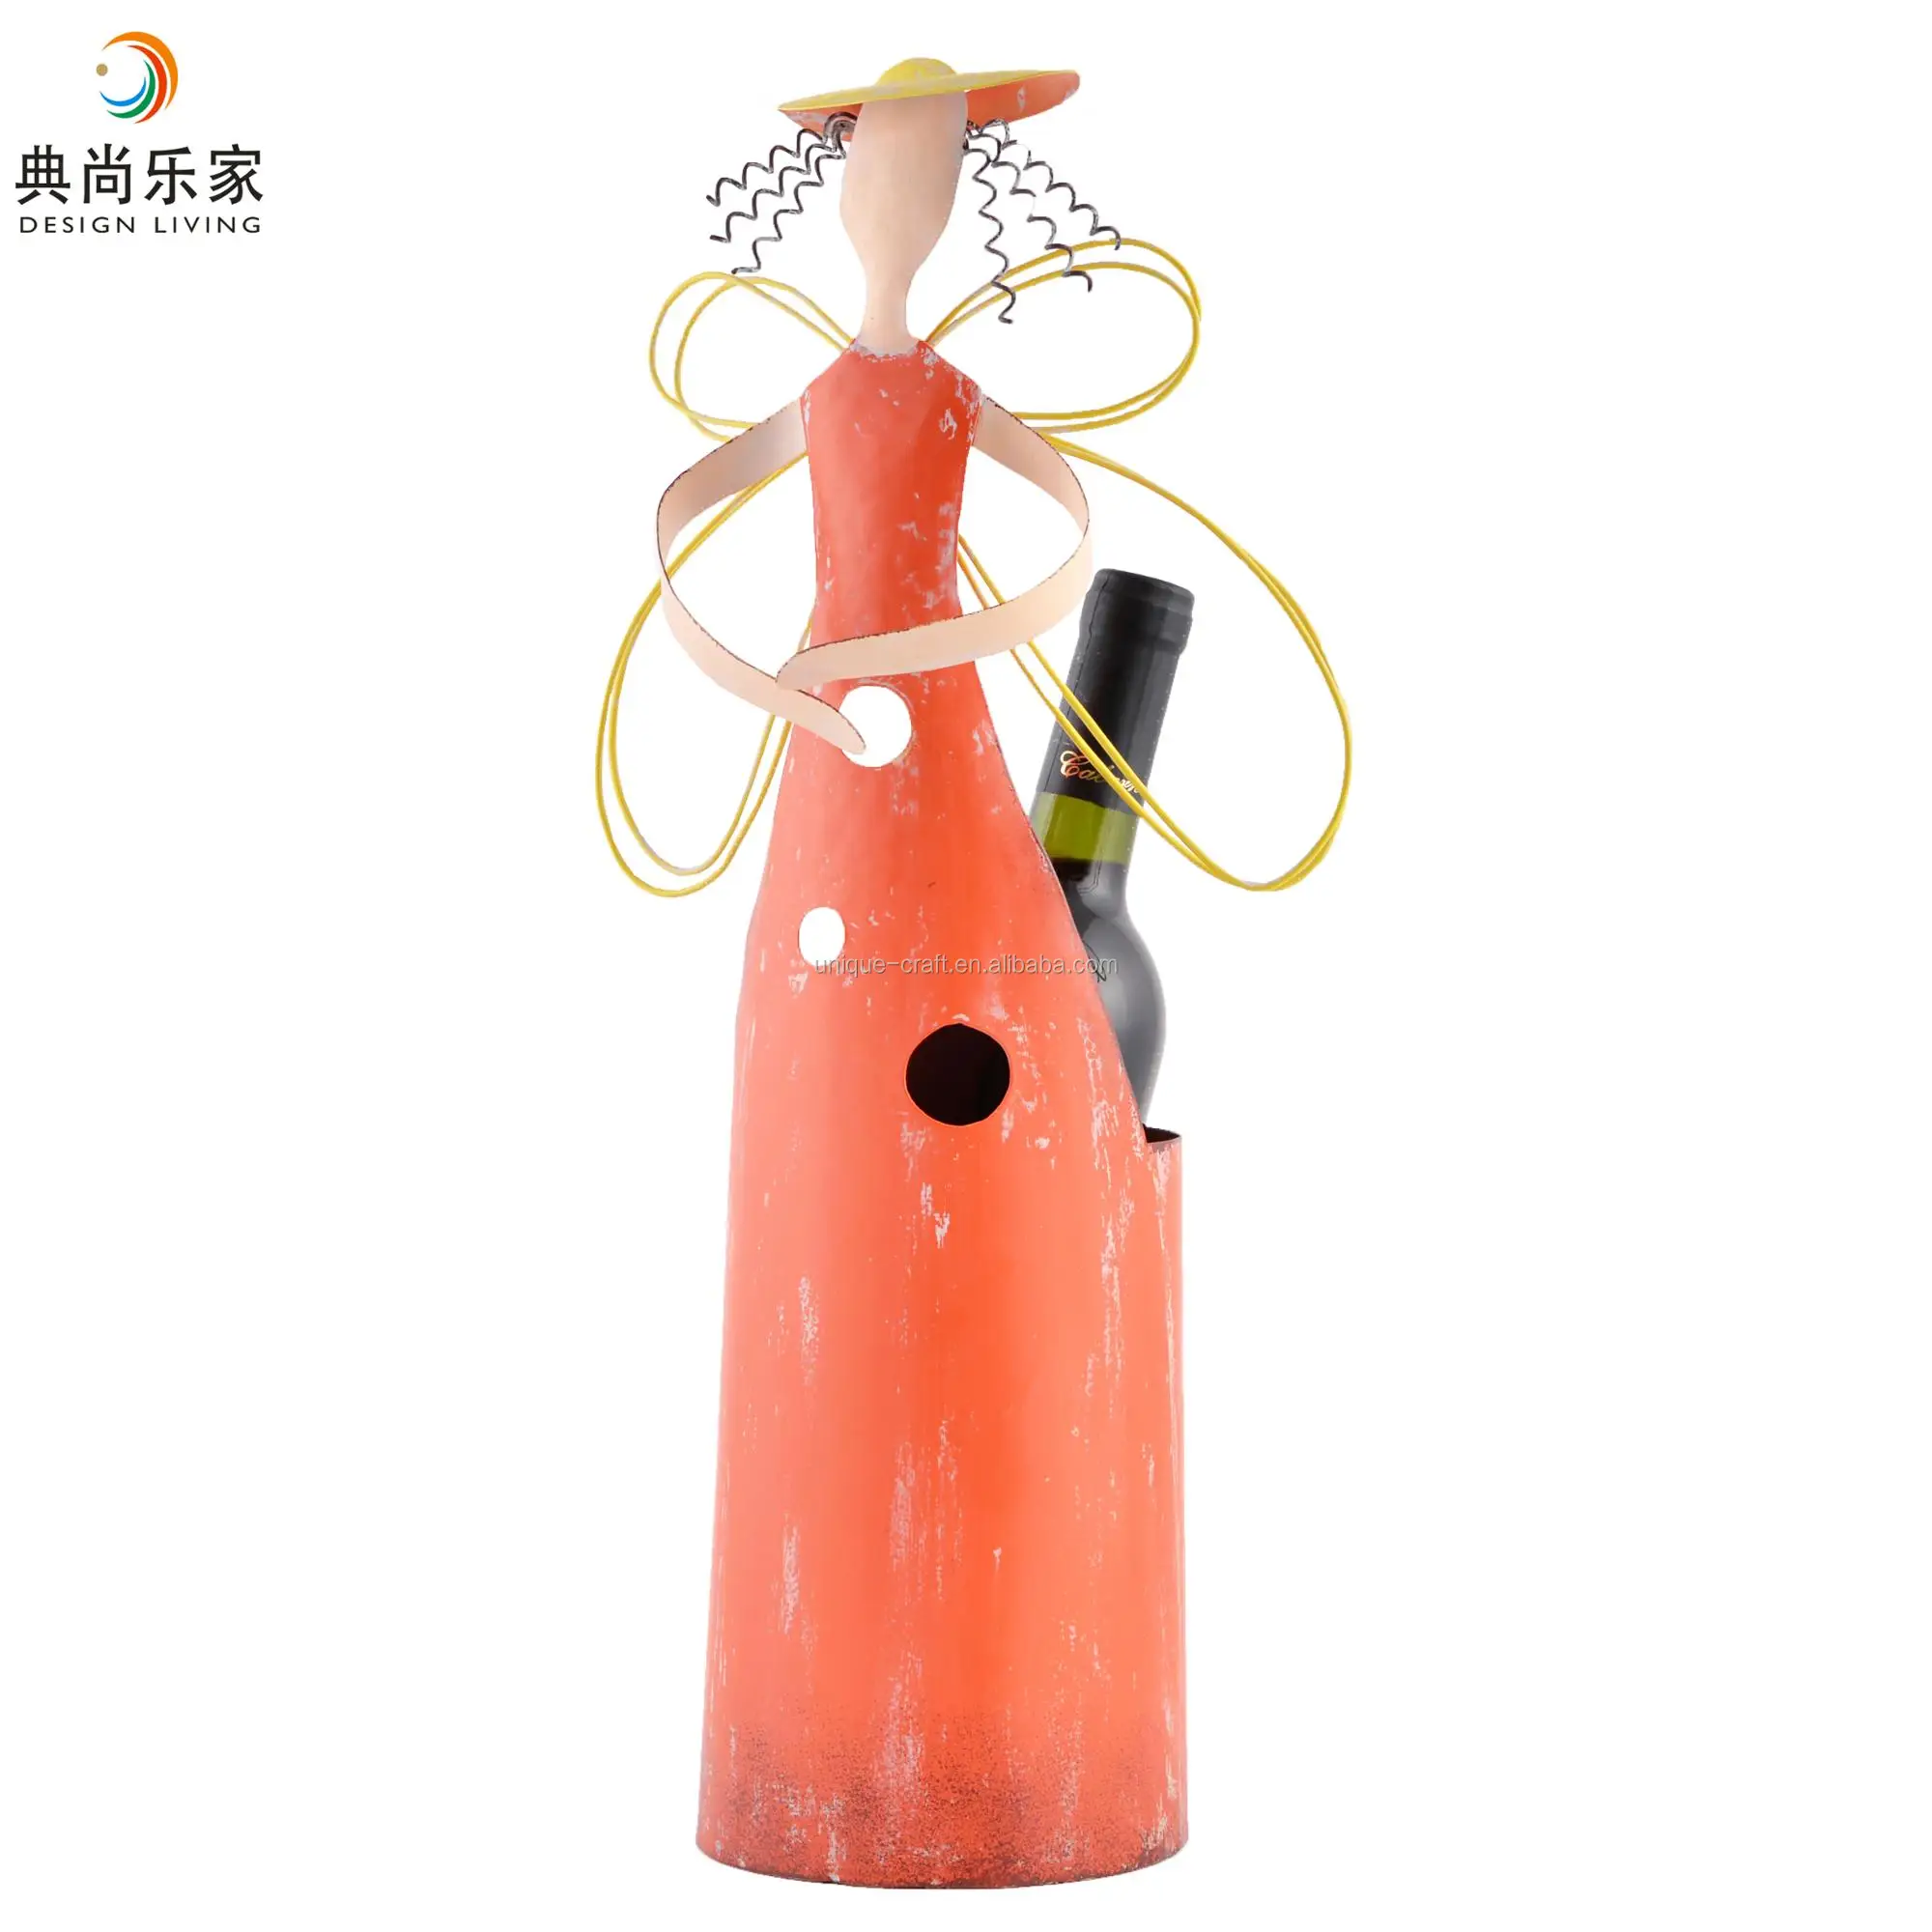 Novelty Lady Shaped Metal Wine Bottle Holder Figurine With Glass Vase